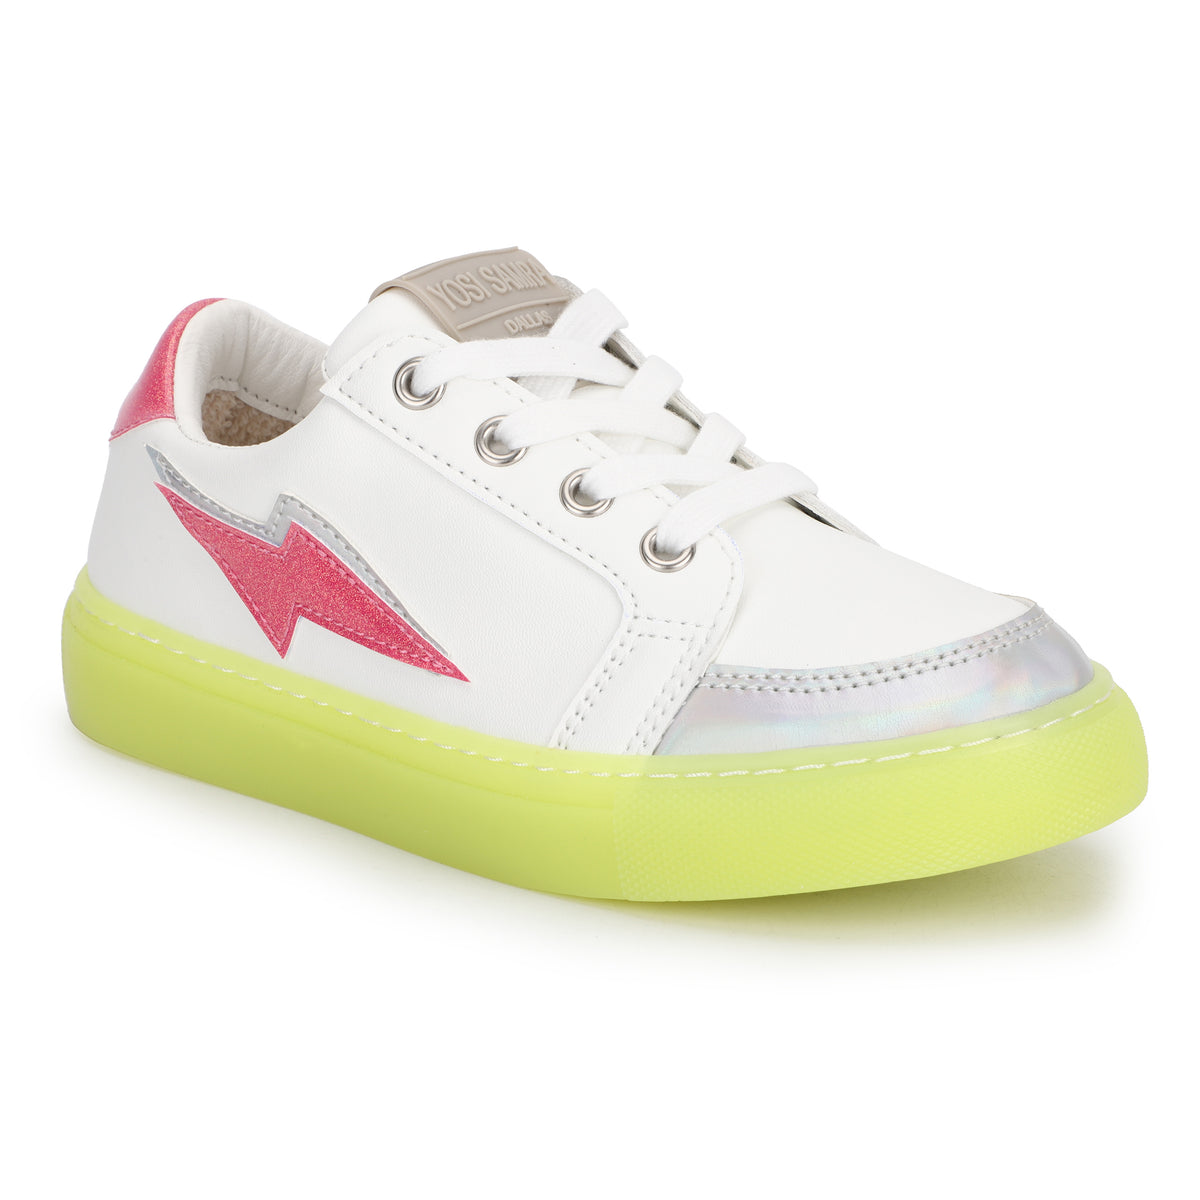 Miss Bolt Sneaker in Pink & Neon Yellow - Kids